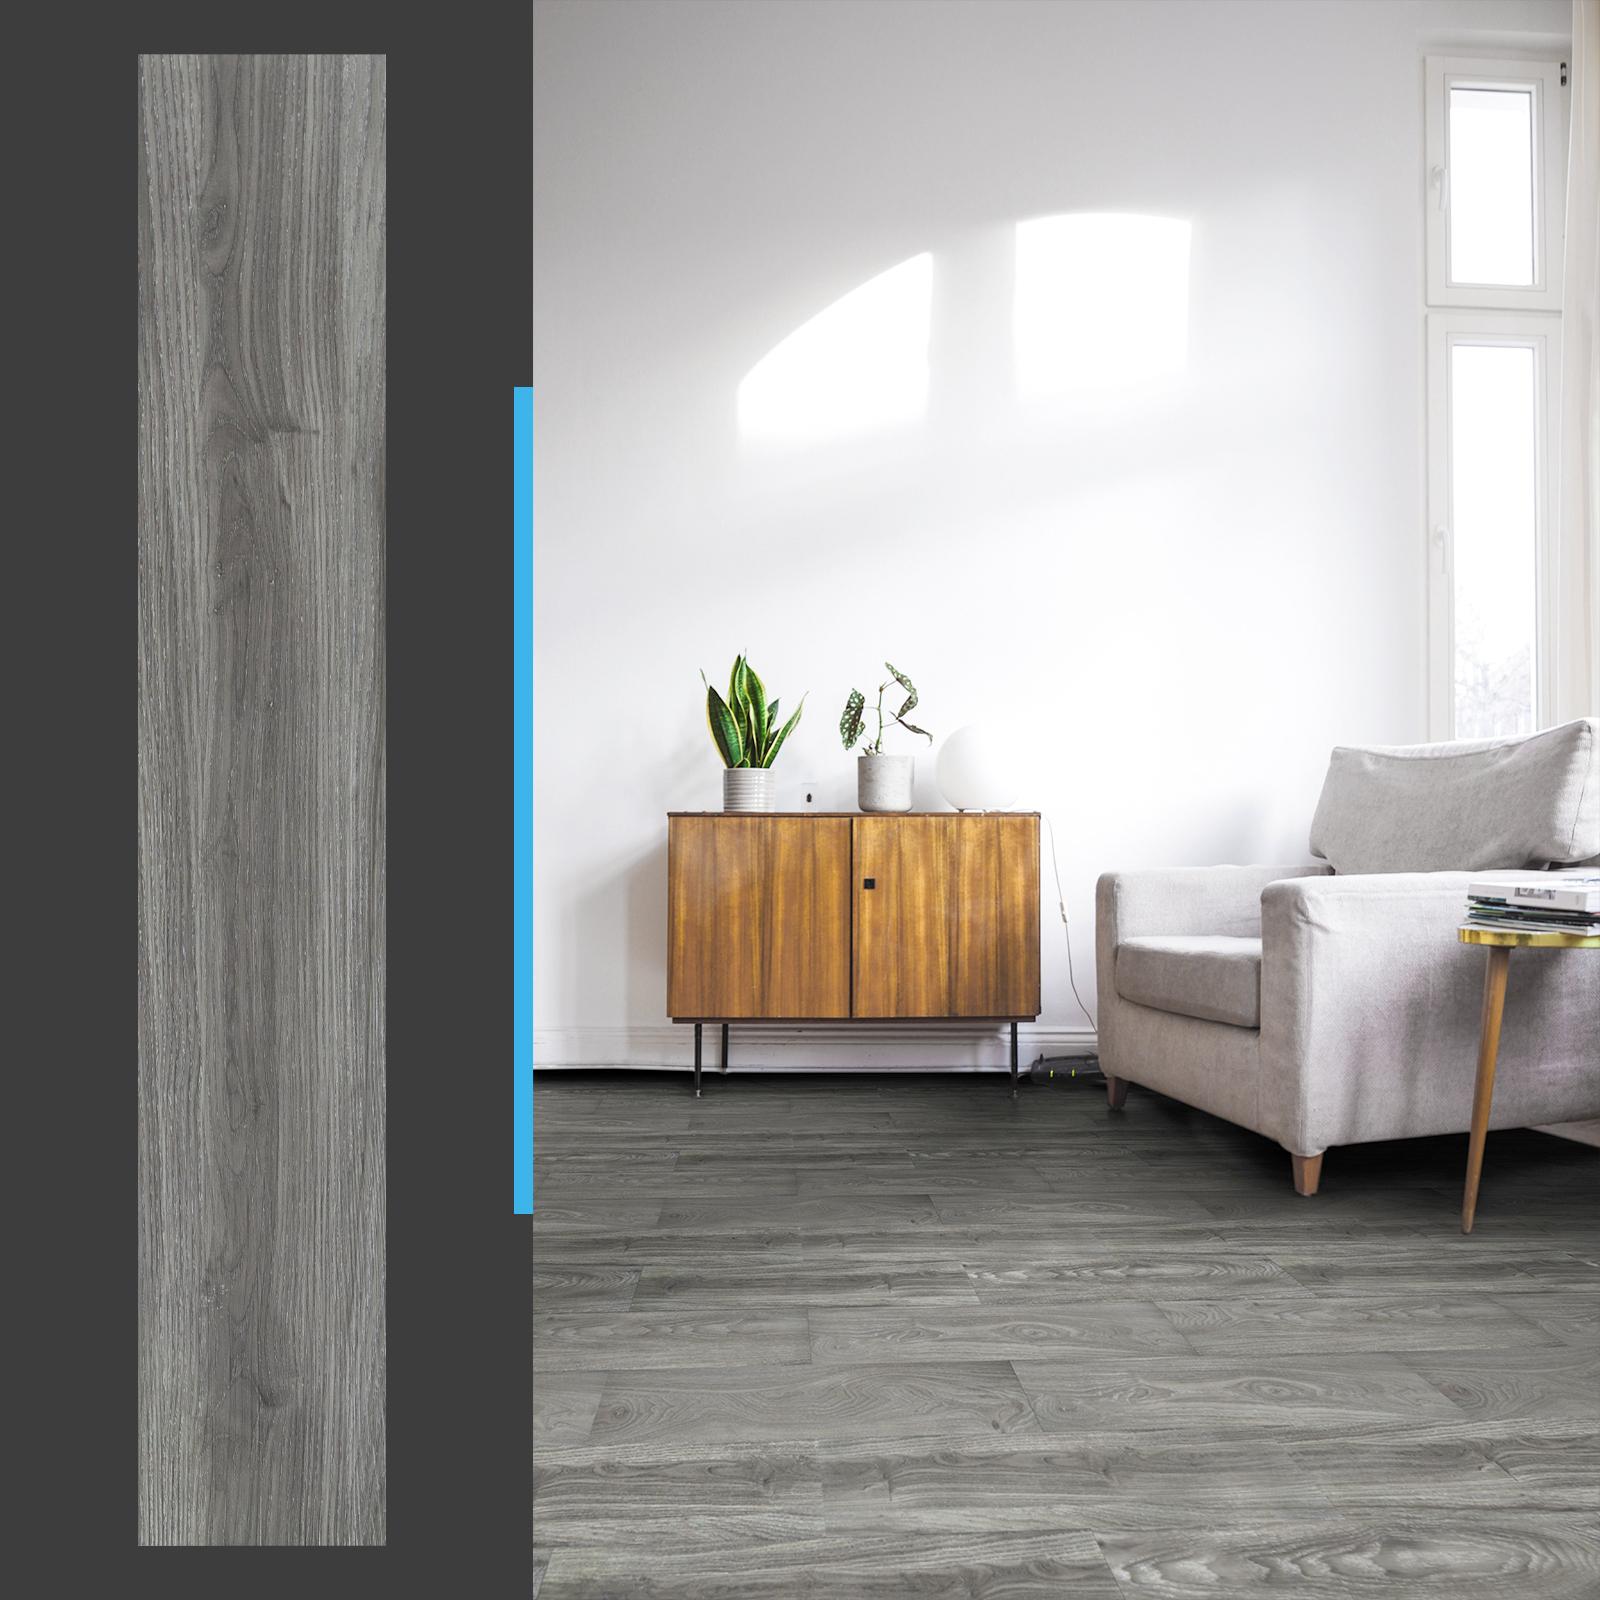 A43002 -Peel and Stick Floor Tile Vinyl Wood Plank 36-Pack 54 Sq.Ft,Rigid Surface Hard Core,Easy DIY Self-Adhesive Flooring